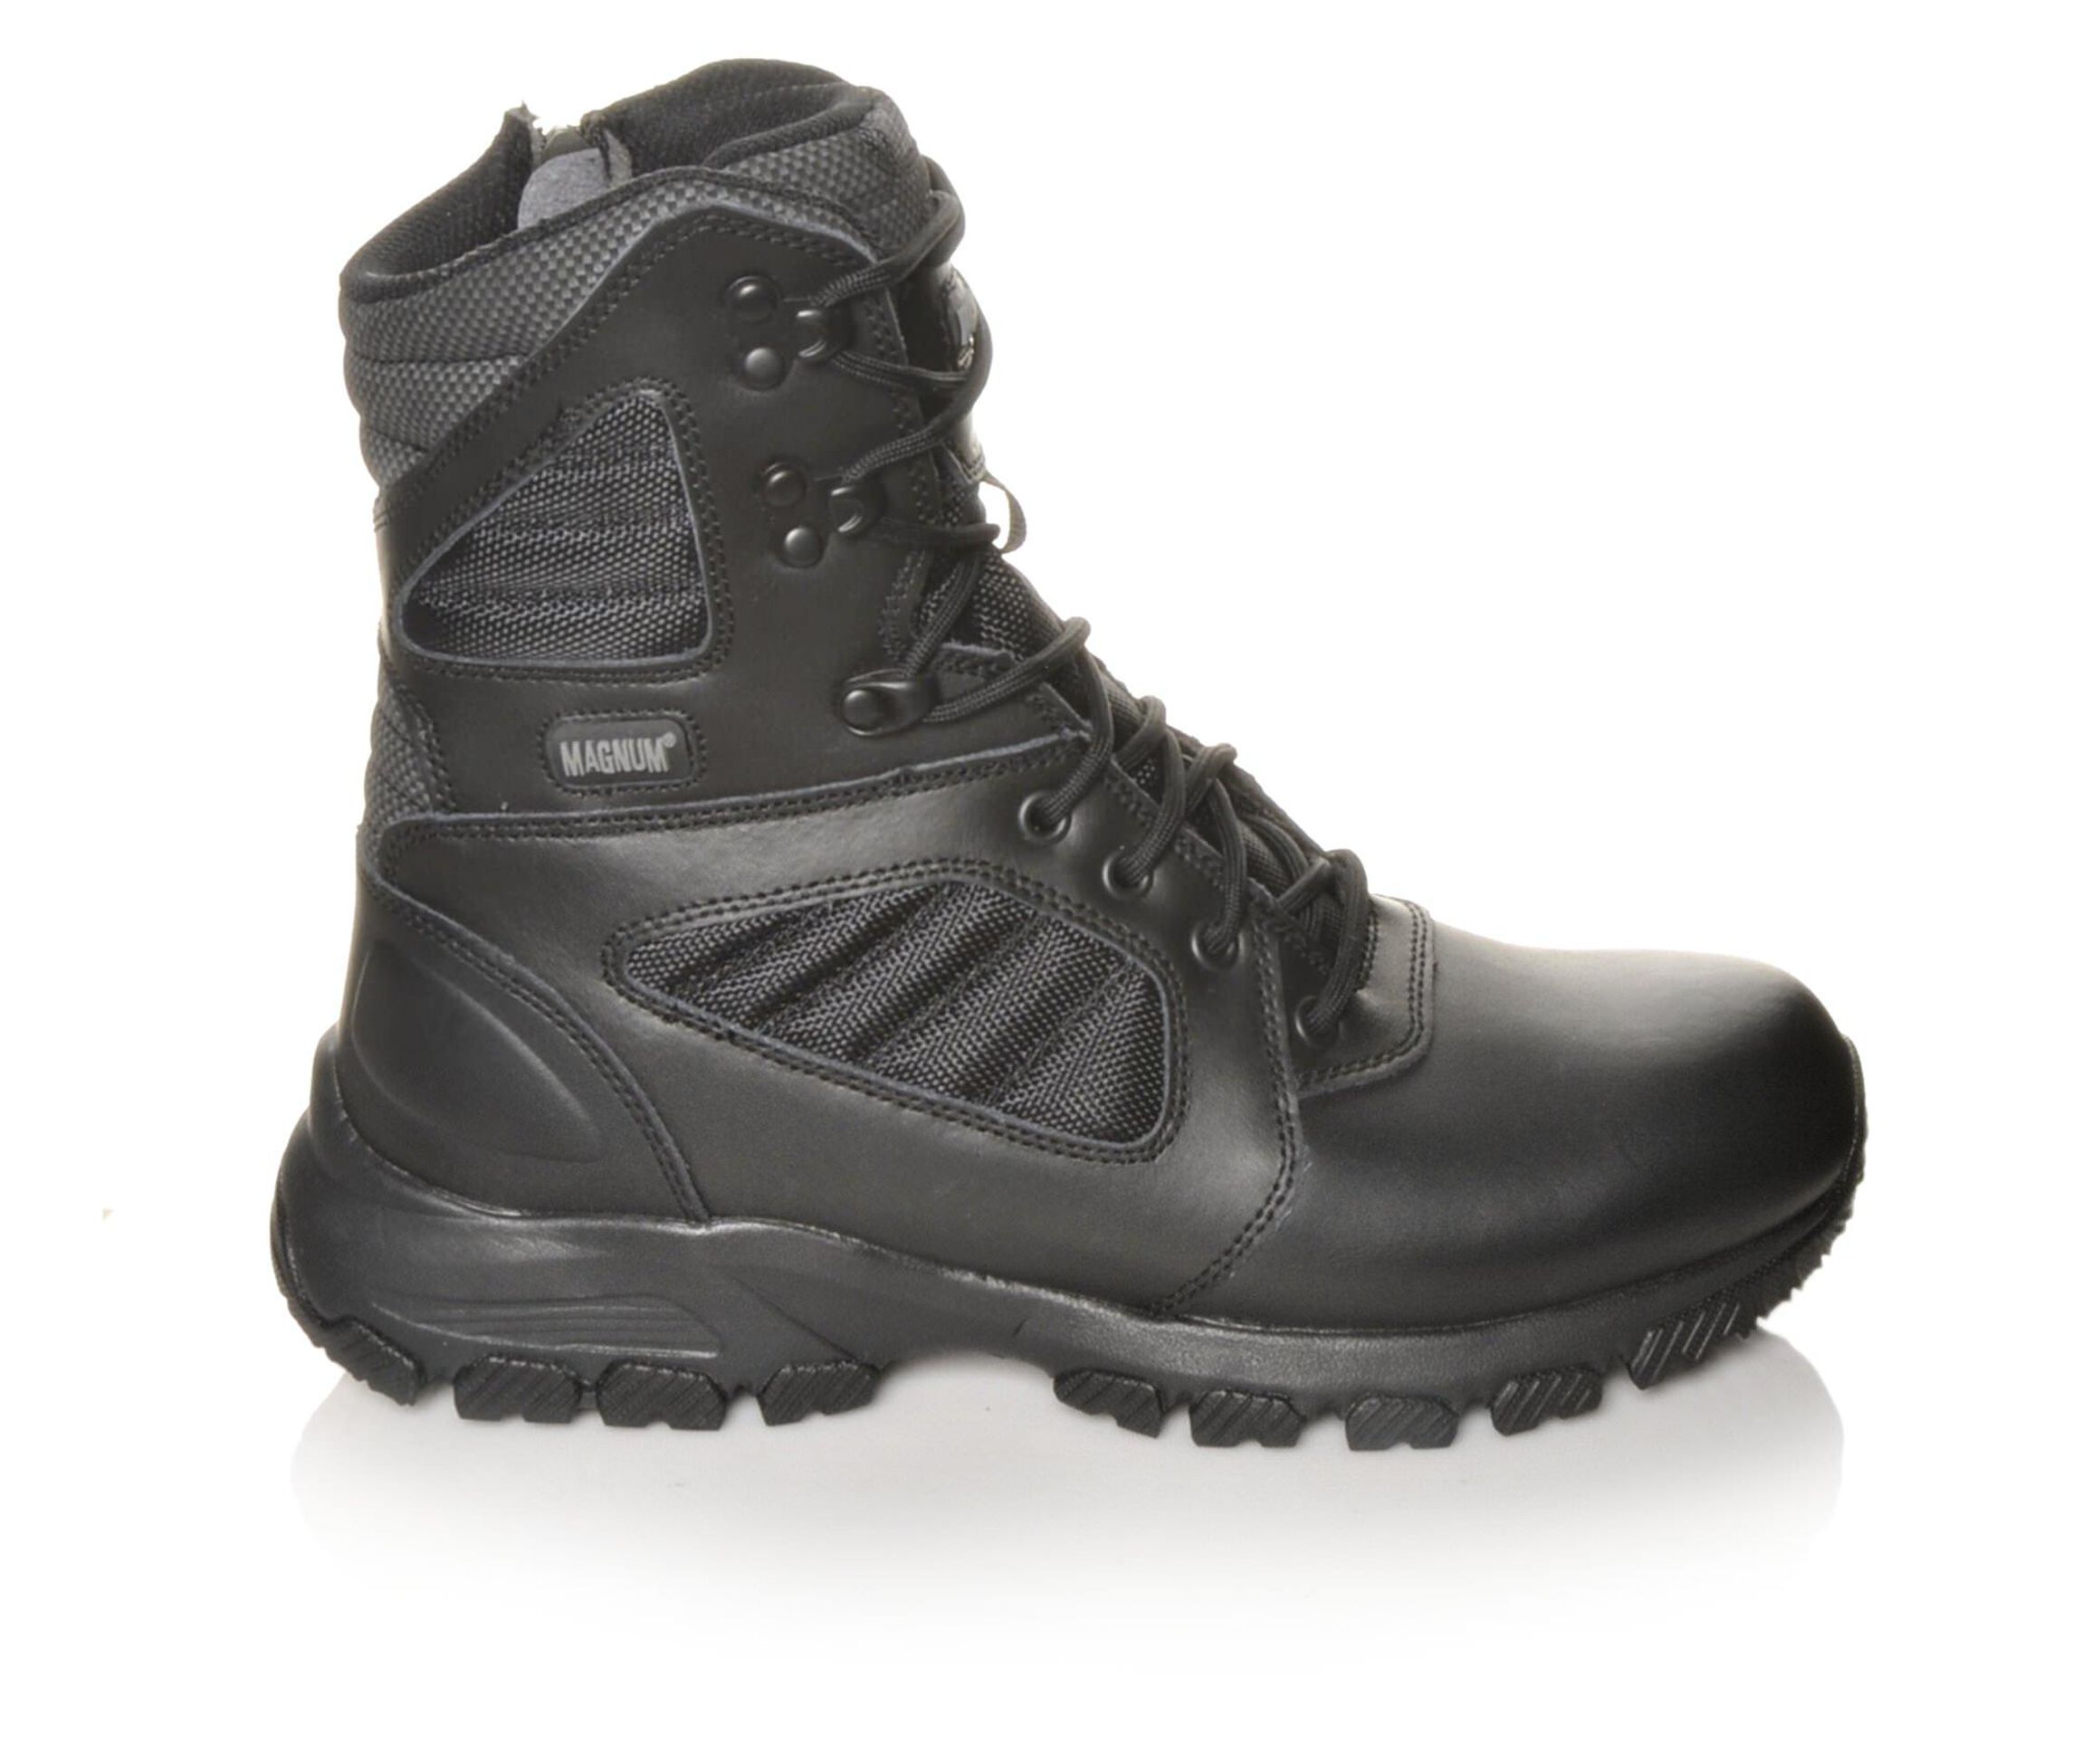 Magnum Response III 8.0 SZ Men's Boots (Black Leather)